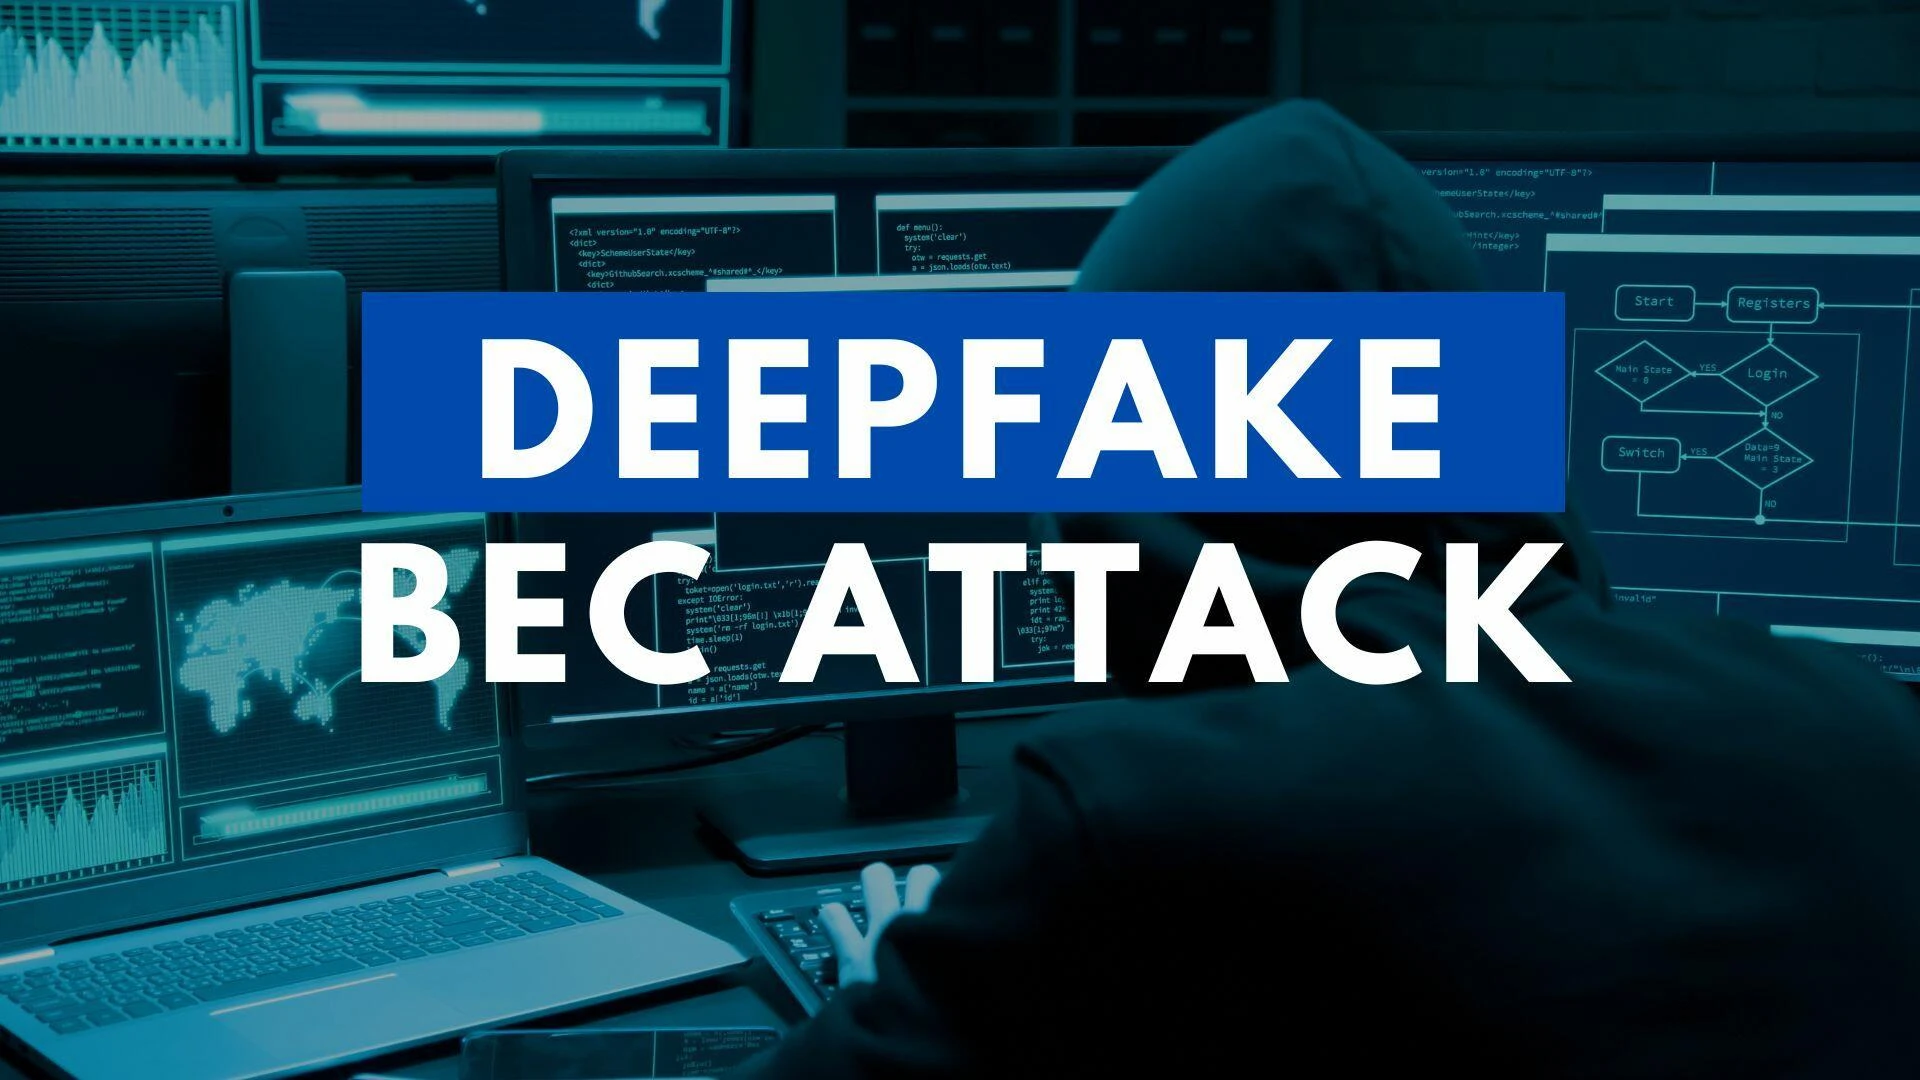 Solution for trend of BEC attacks utilizing Deepfake techniques?